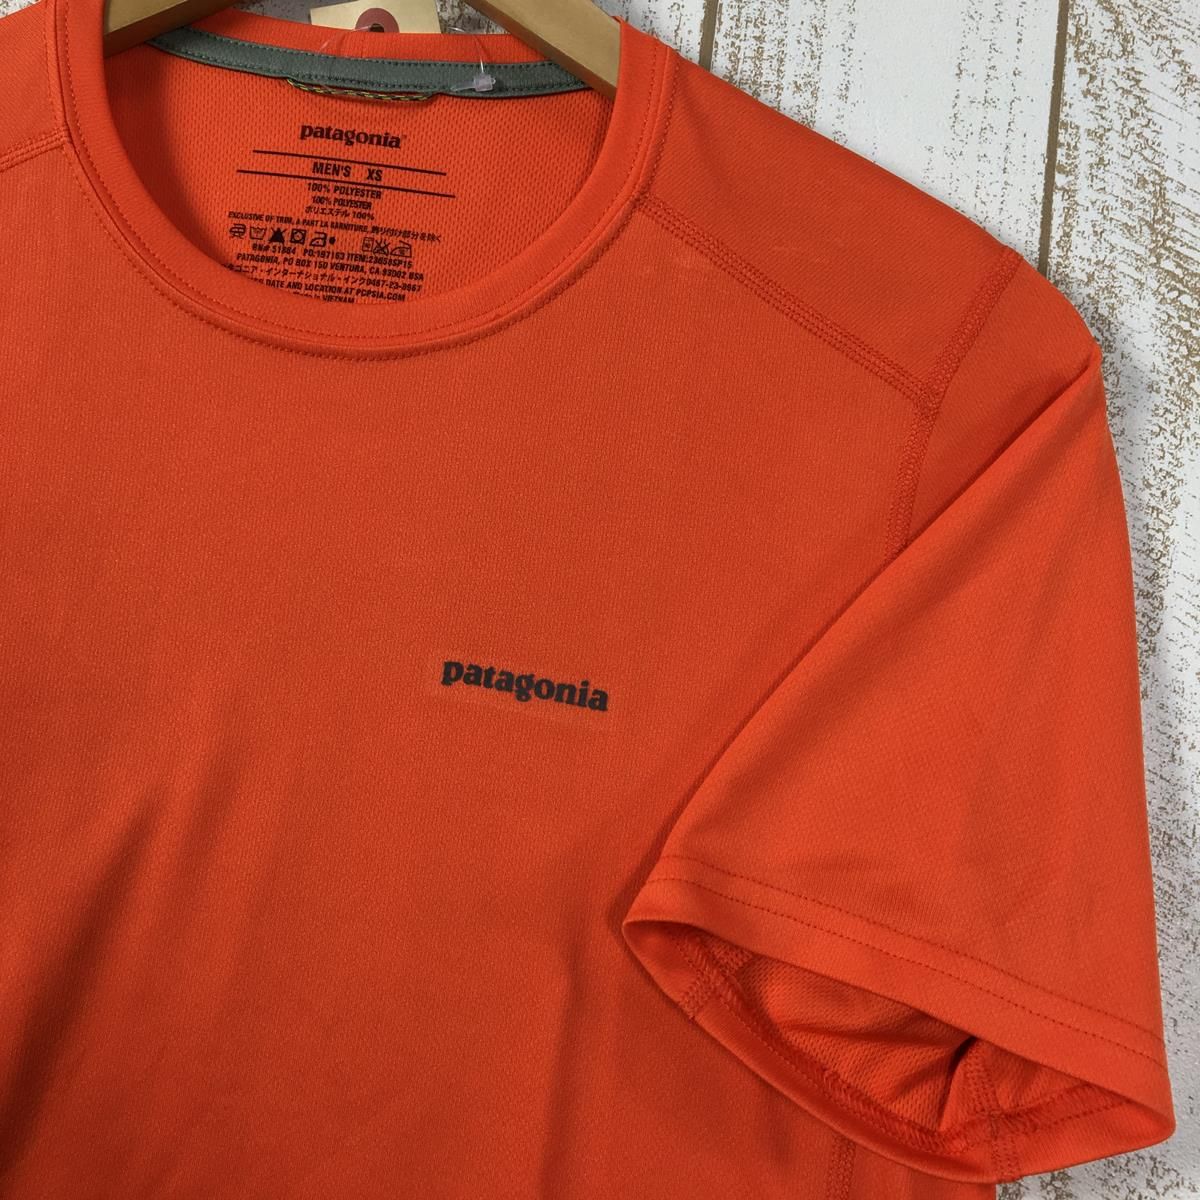 MENs XS パタゴニア ショートスリーブ フォアランナー シャツ Short Sleeve Fore Runner Shirt 生産終了モデル  入手困難 PATAGONIA 23658 オレンジ系 - メルカリ